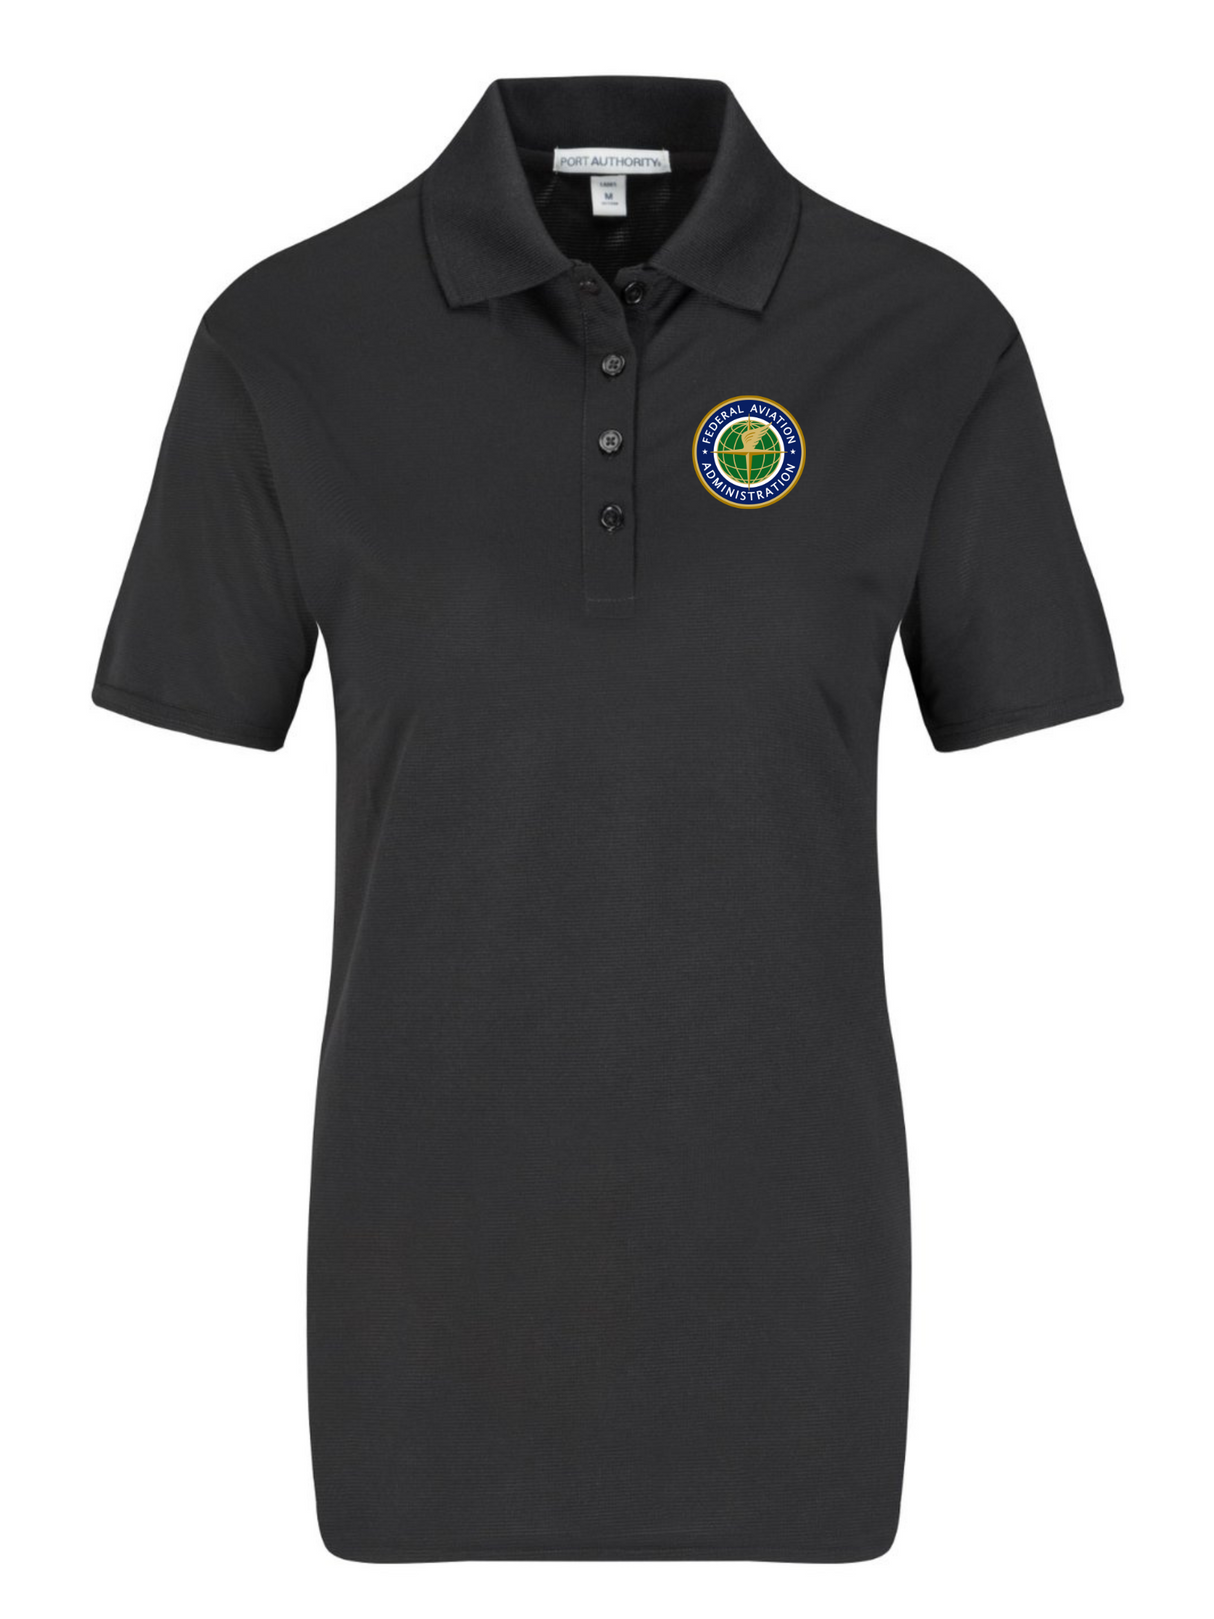 FAA Polo Shirt - Women's Short Sleeve - FEDS Apparel